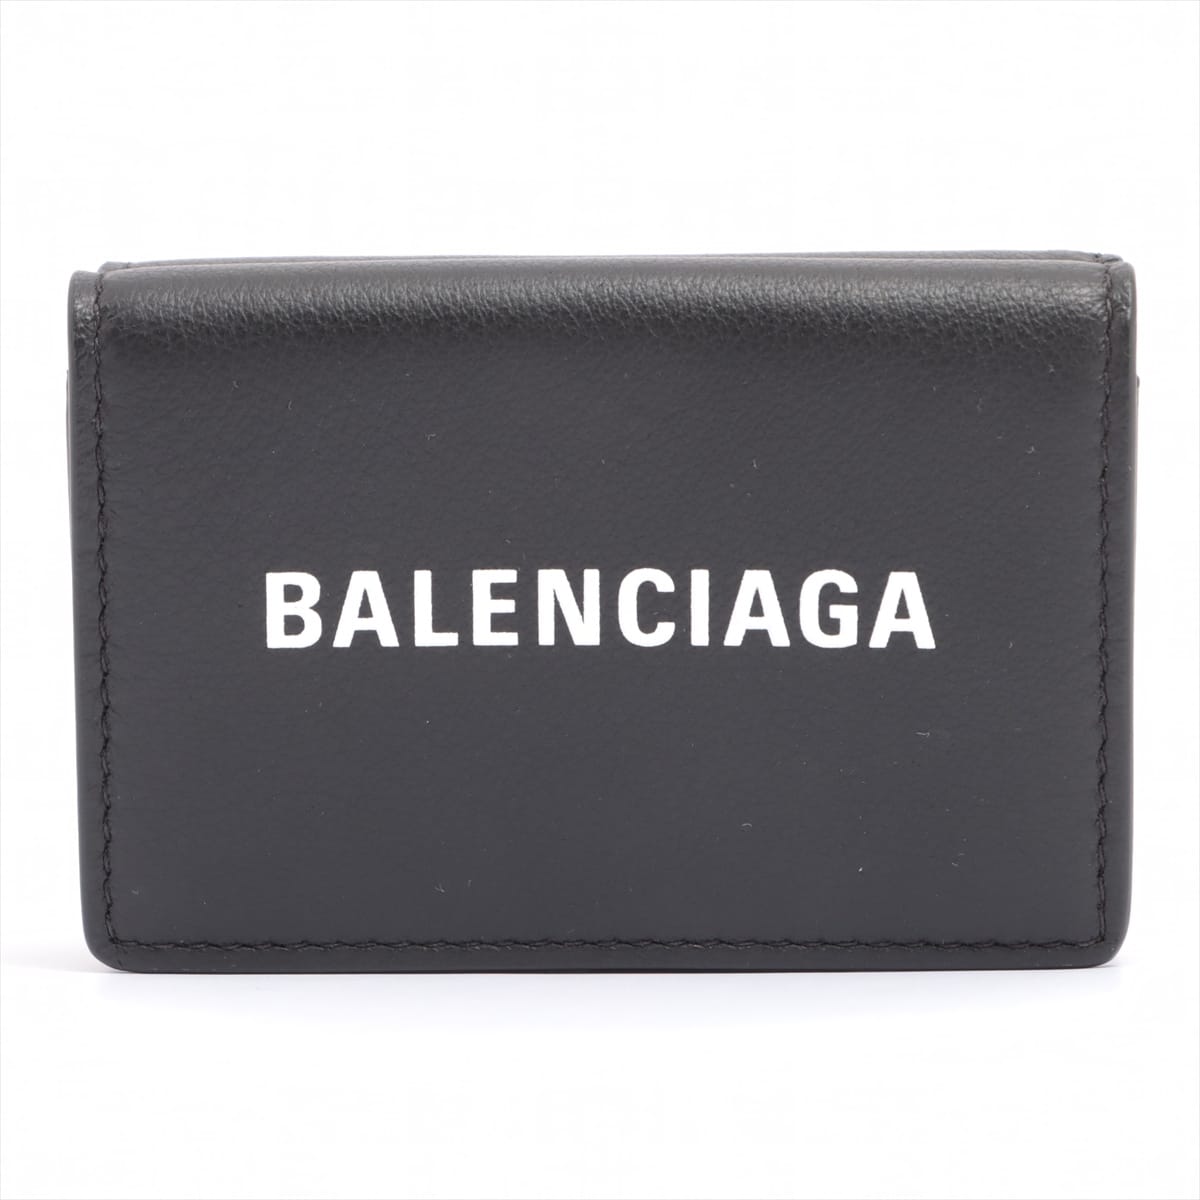 Balenciaga Everyday 505055 Leather Wallet Black